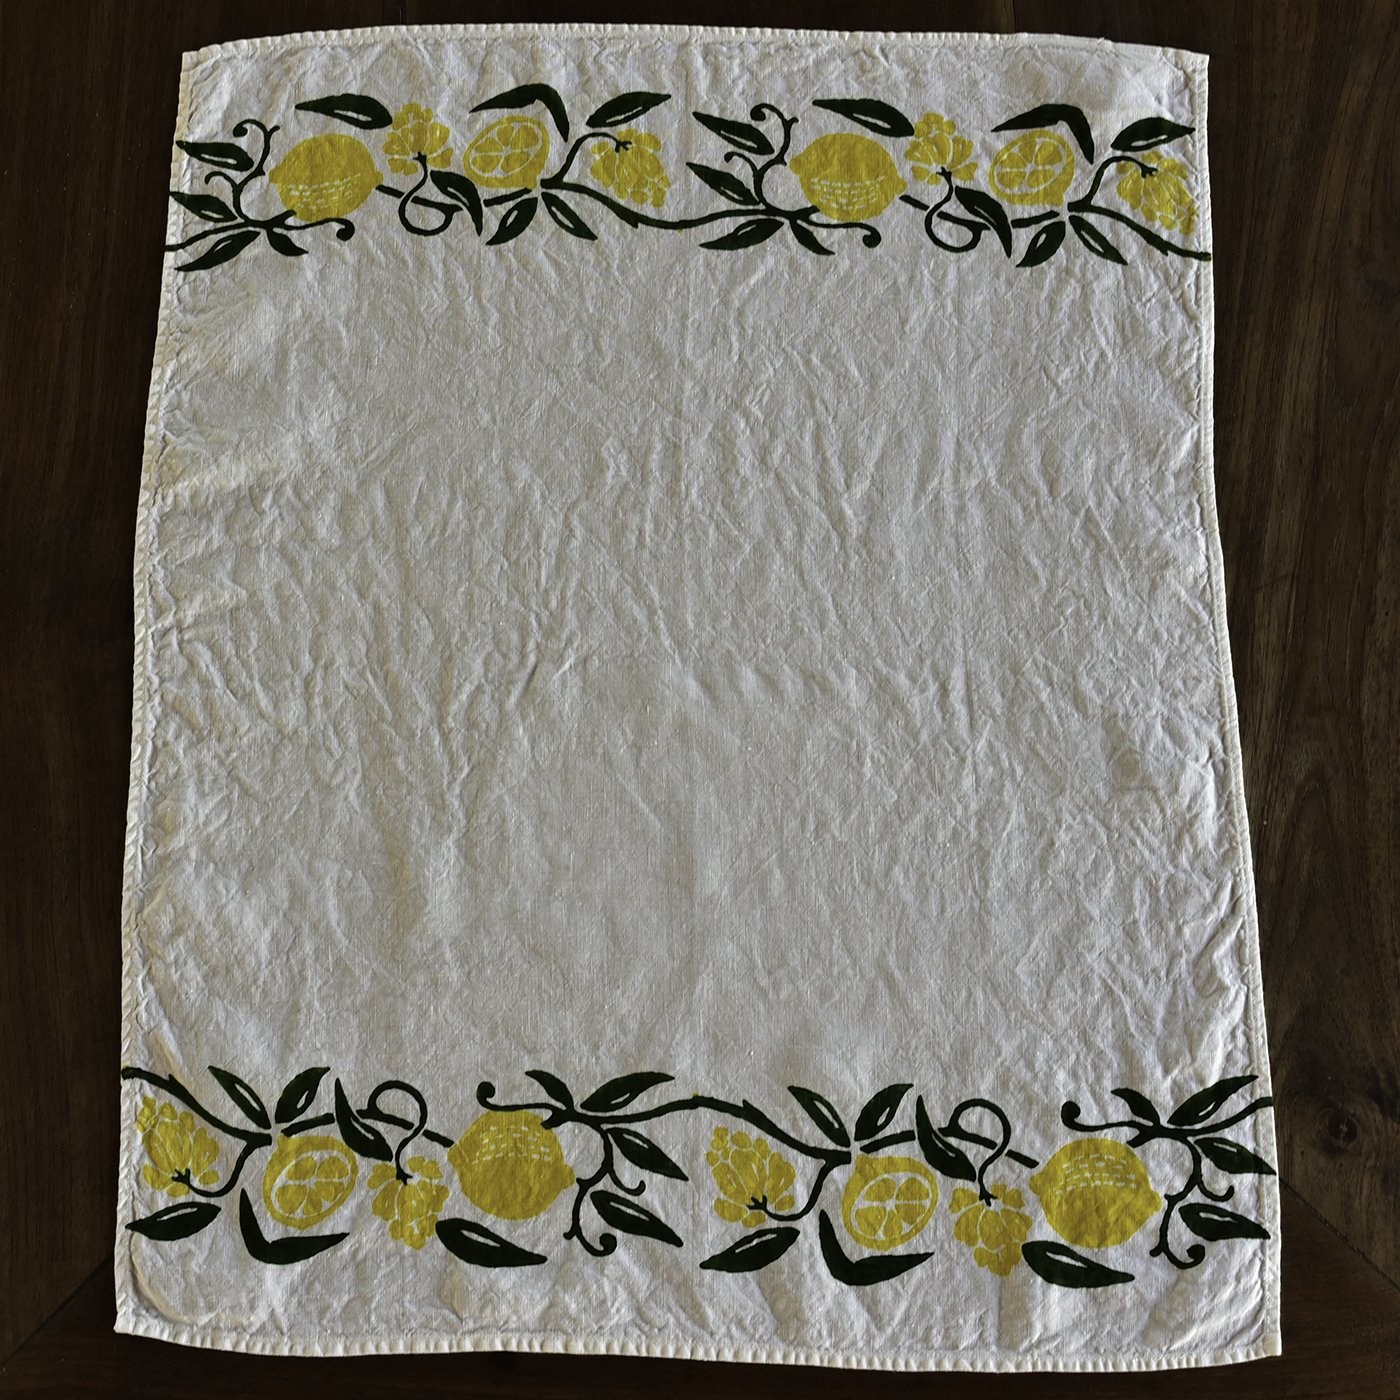 https://www.allorashop.com/wp-content/uploads/2021/04/3-hand-printed-linen-tea-towels-Lemon.jpg